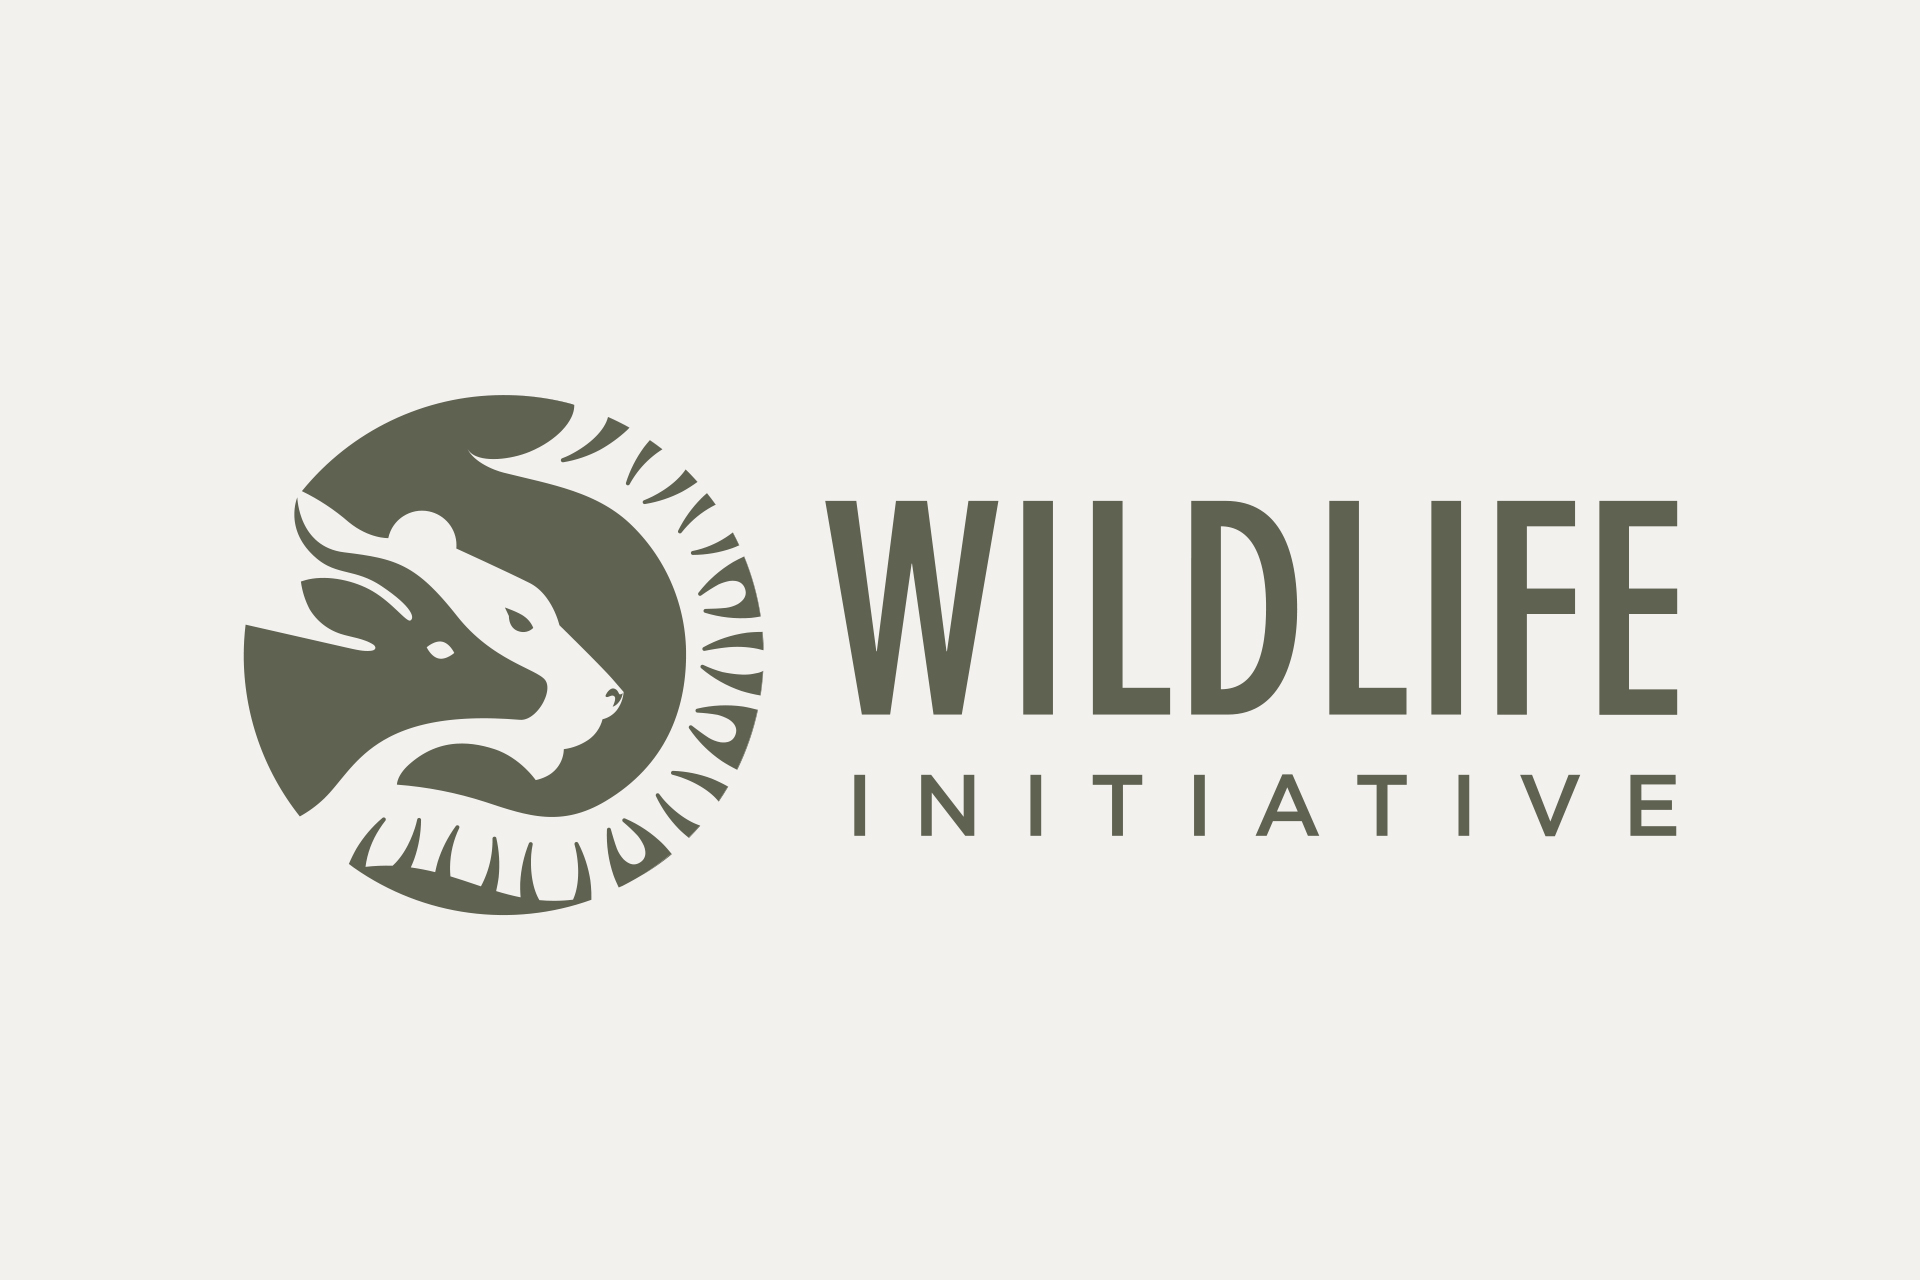 Welcome to Wildlife Initiative!